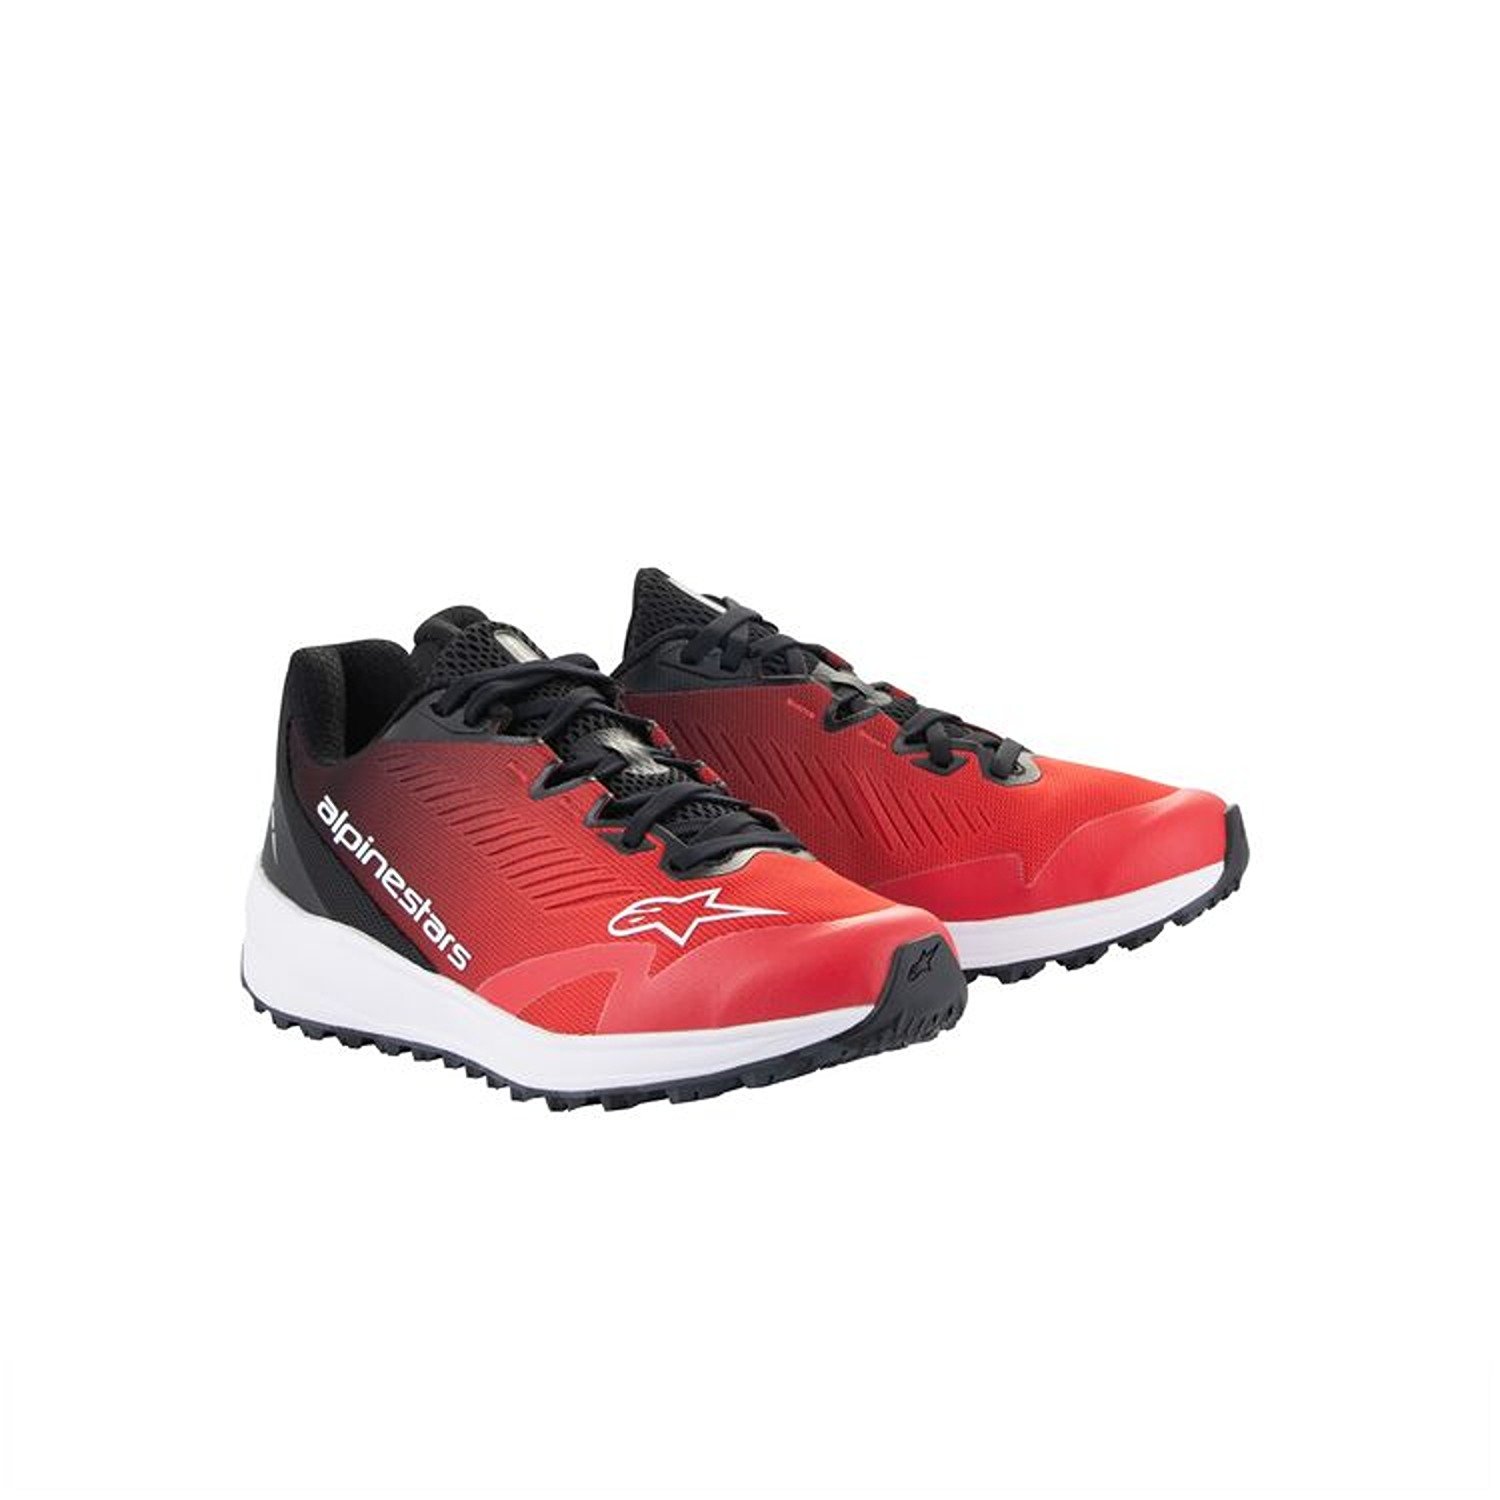 Image of Alpinestars Meta Road V2 Shoes Red Black White Size US 105 ID 8059347353593